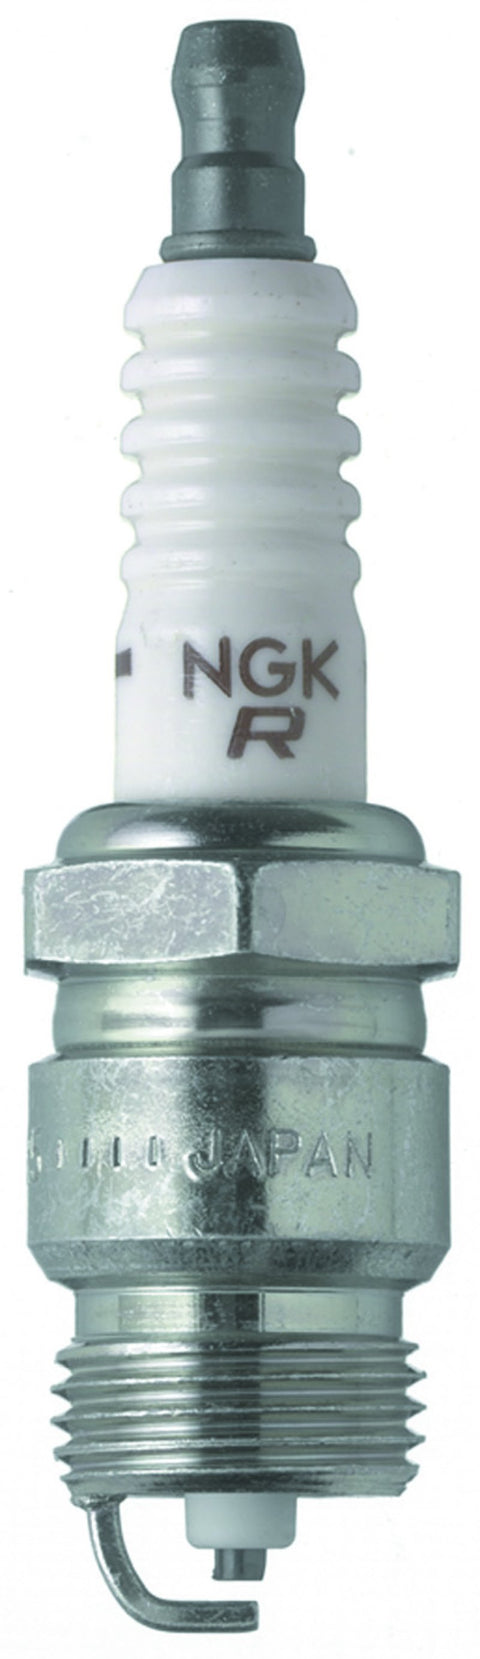 NGK V-Power Spark Plug Box of 4 (2438)